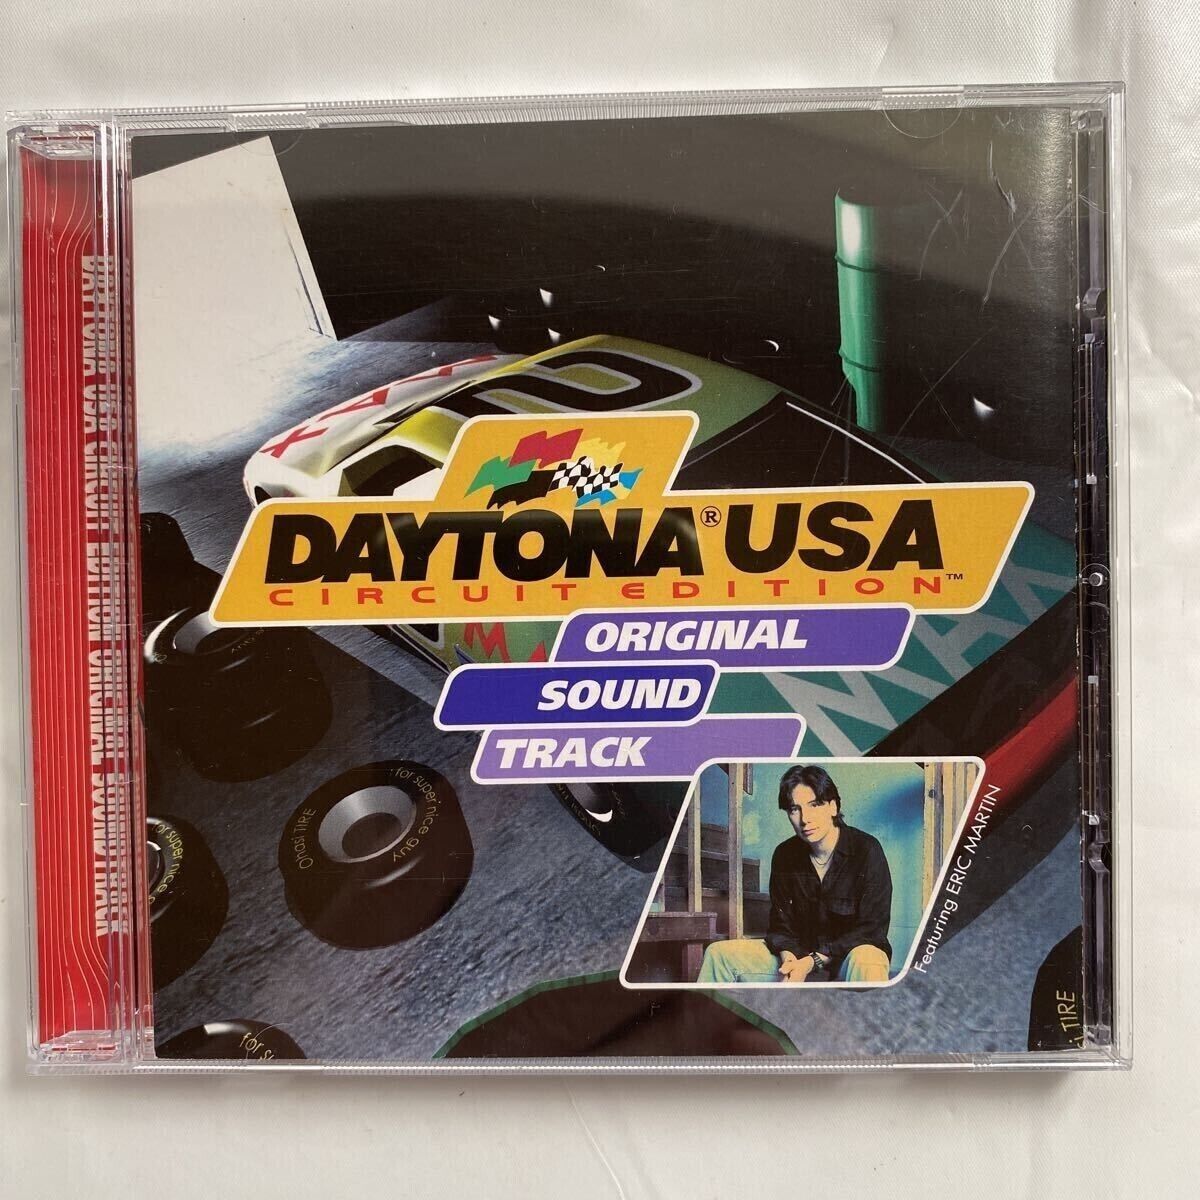 Daytona USA Circuit Edition Original Soundtrack 1CD OBI 1997 OST From Japan Used